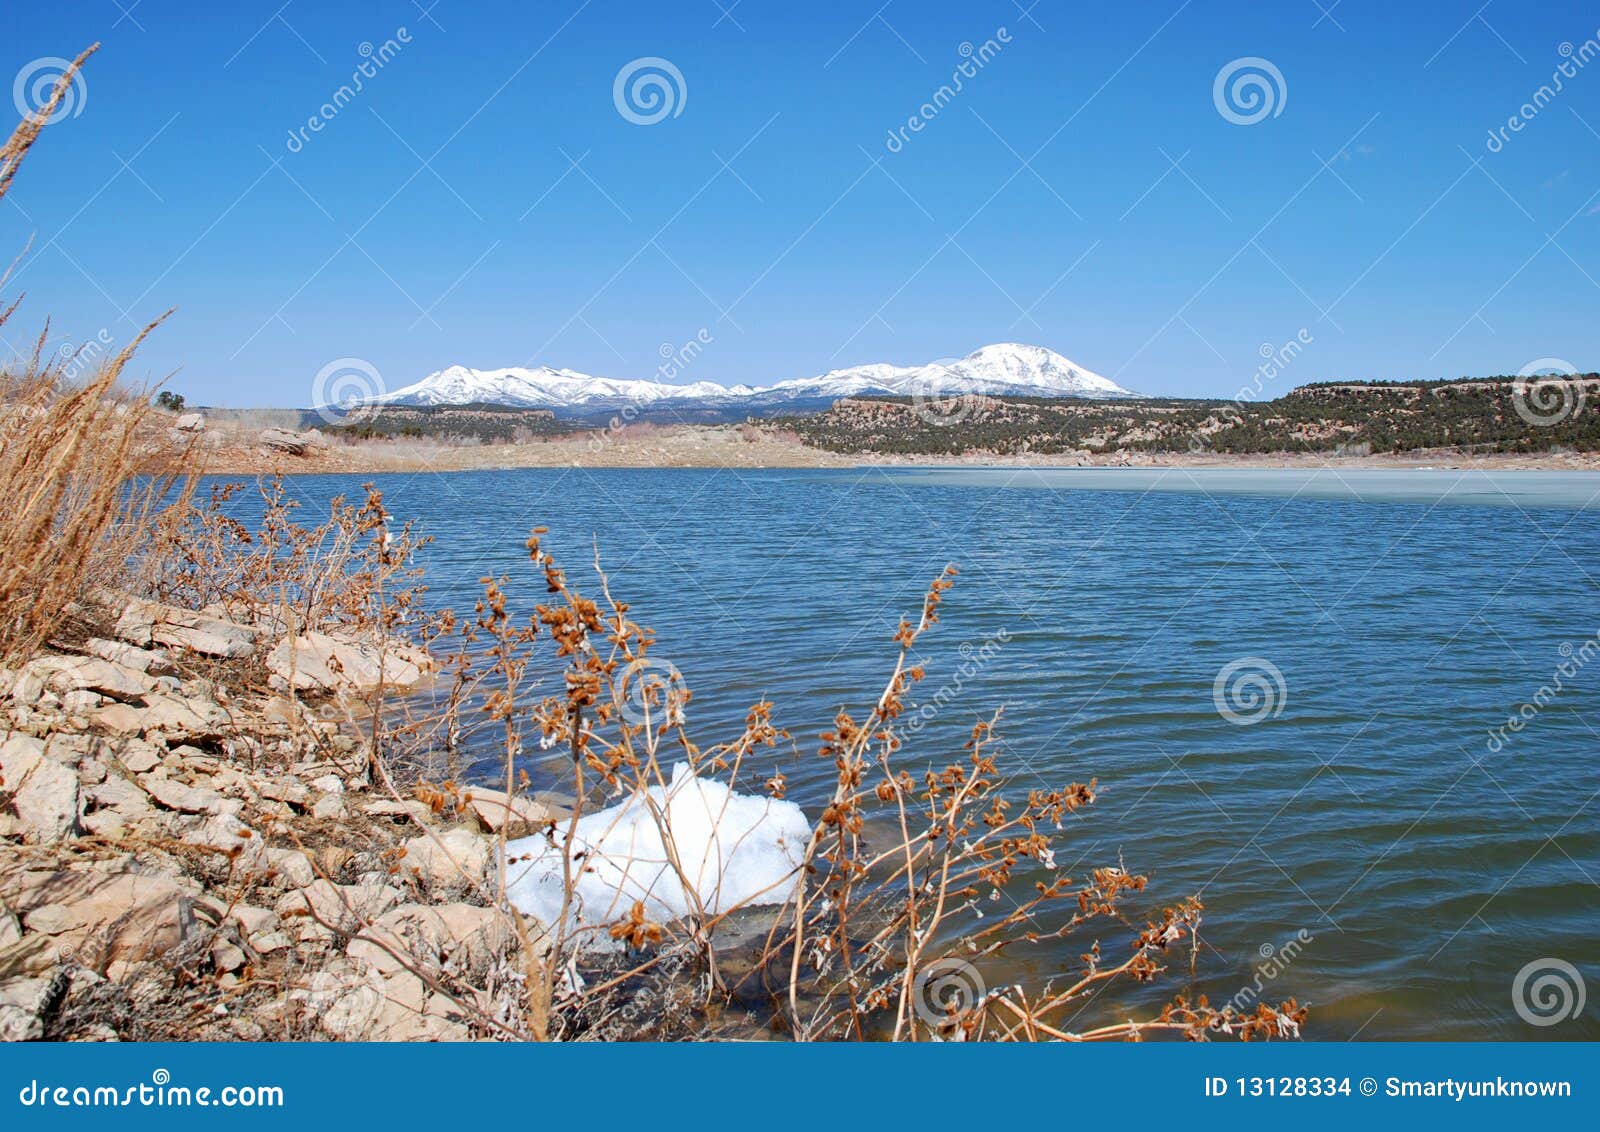 abajo mountains and winter lake in utah